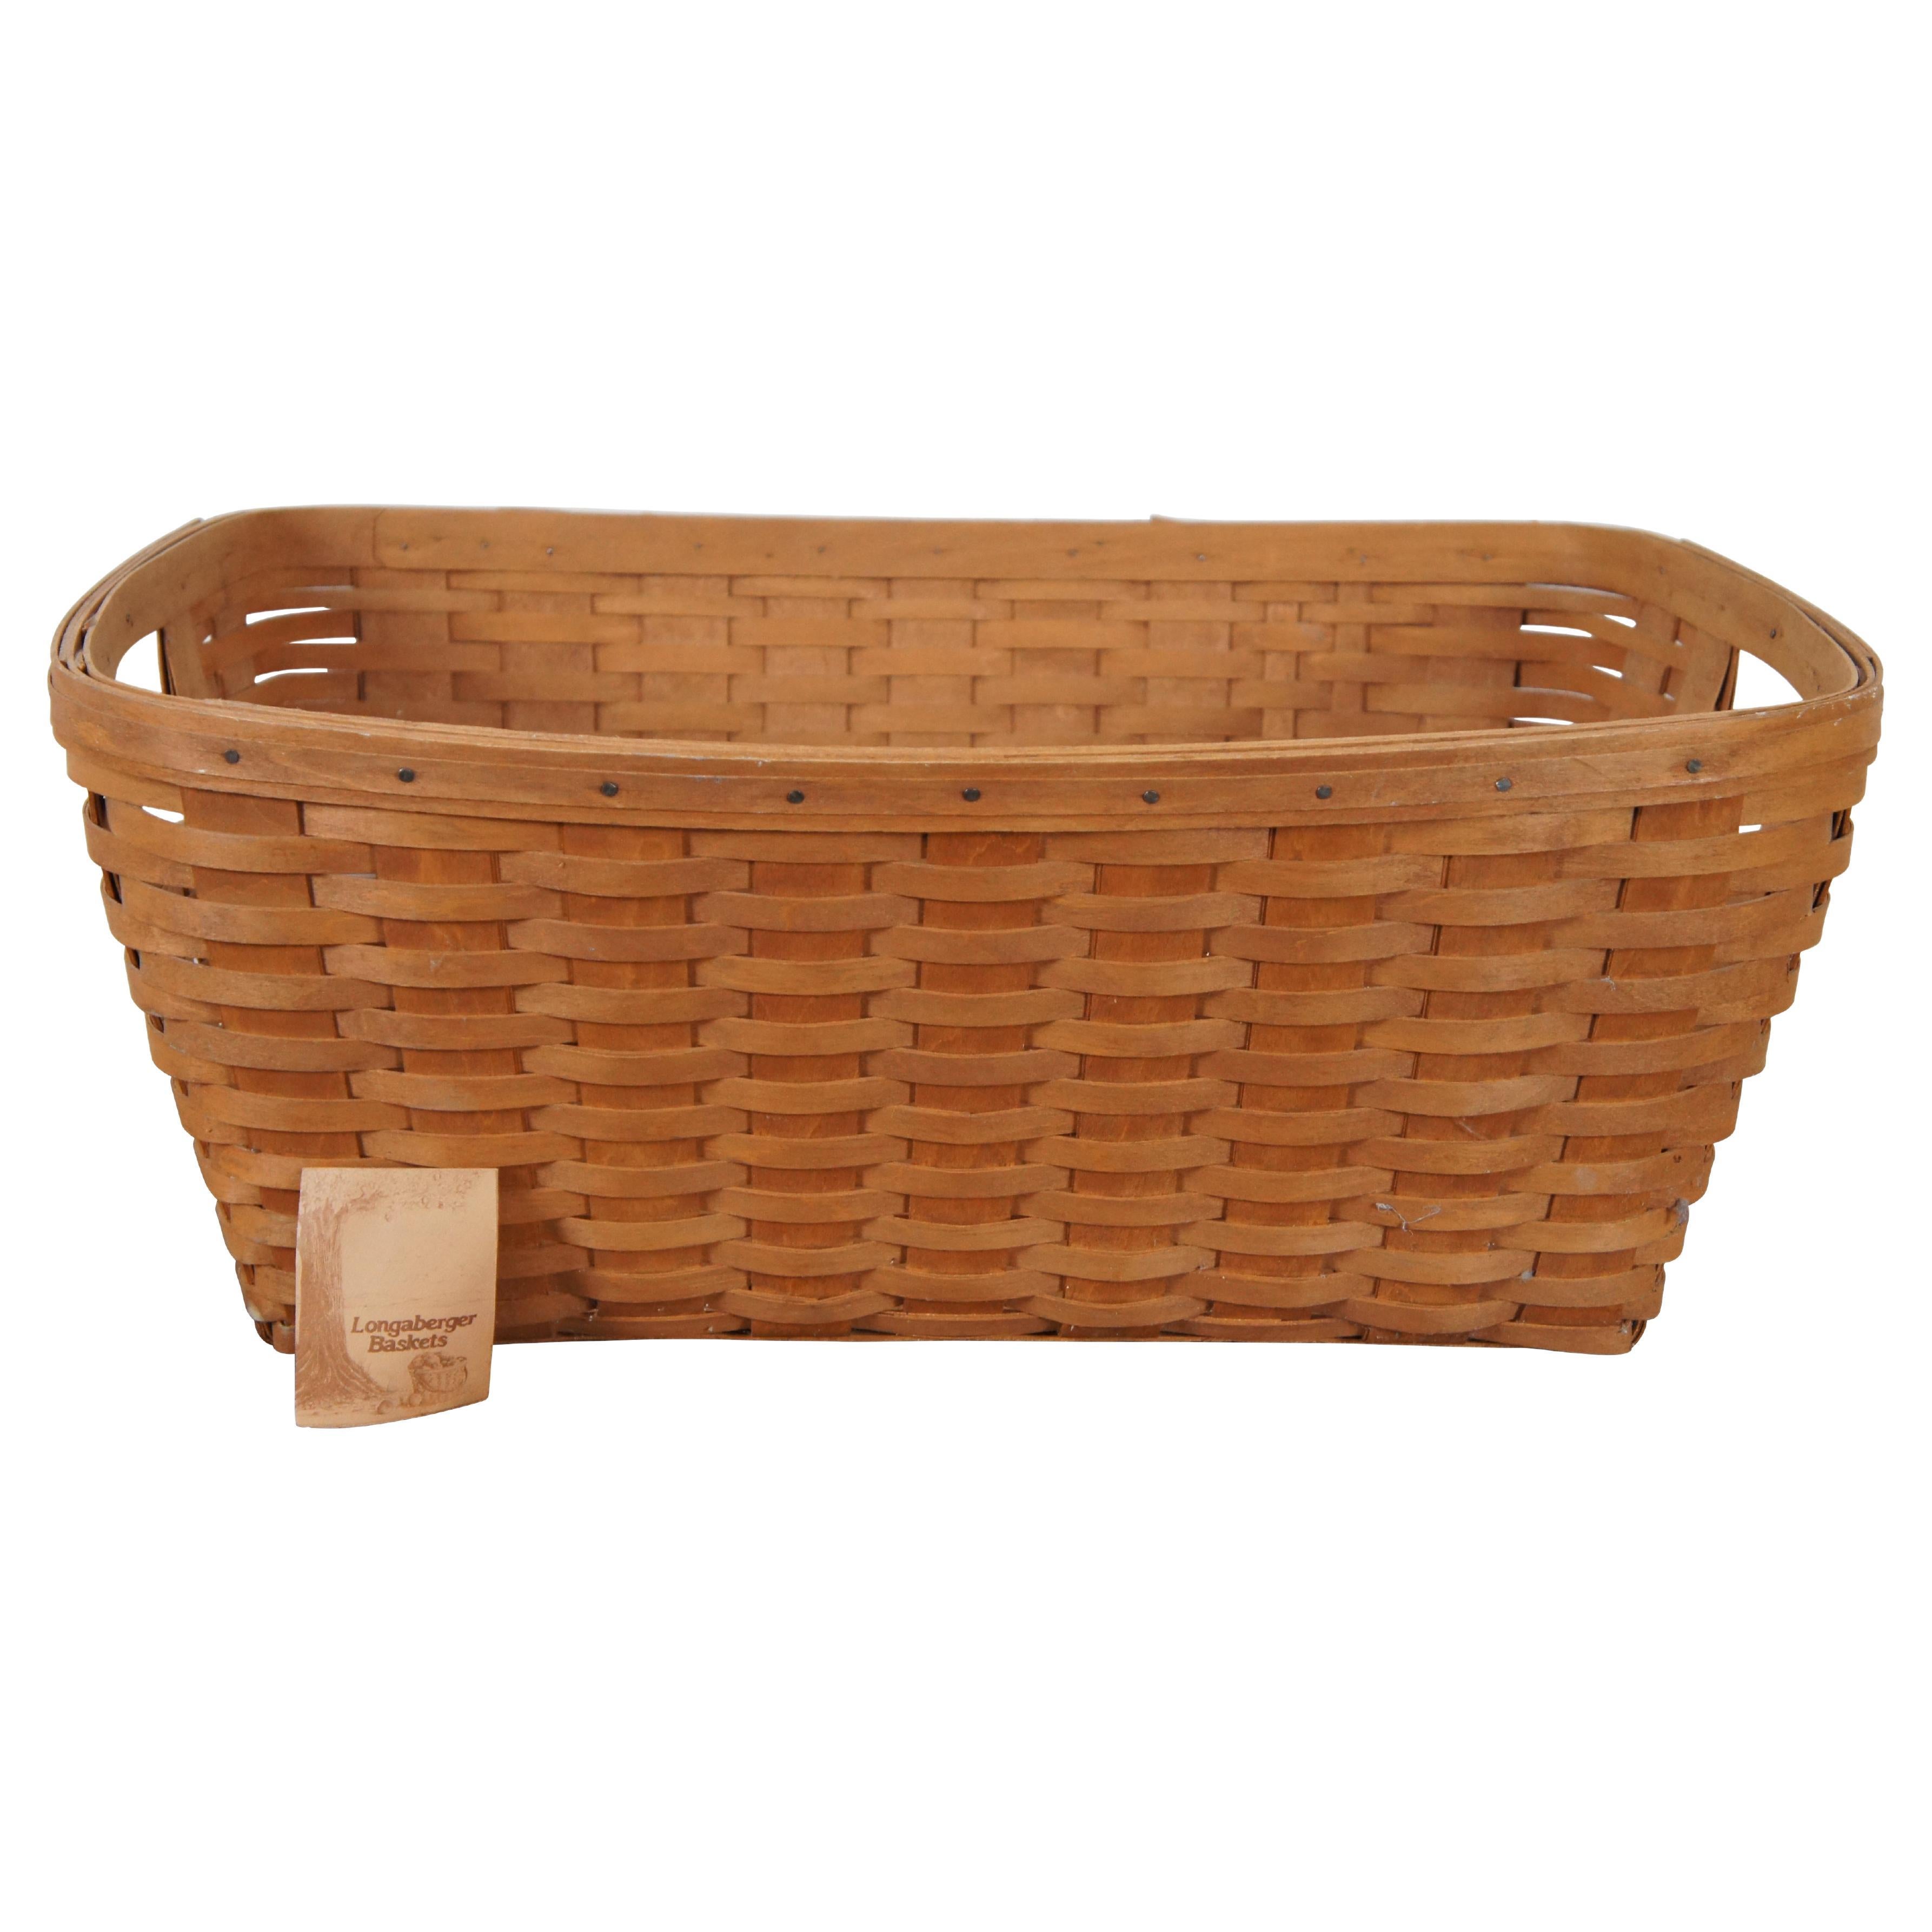 Vintage 1987 Longaberger Laundry Basket Maple Wicker Woven Handle 24”